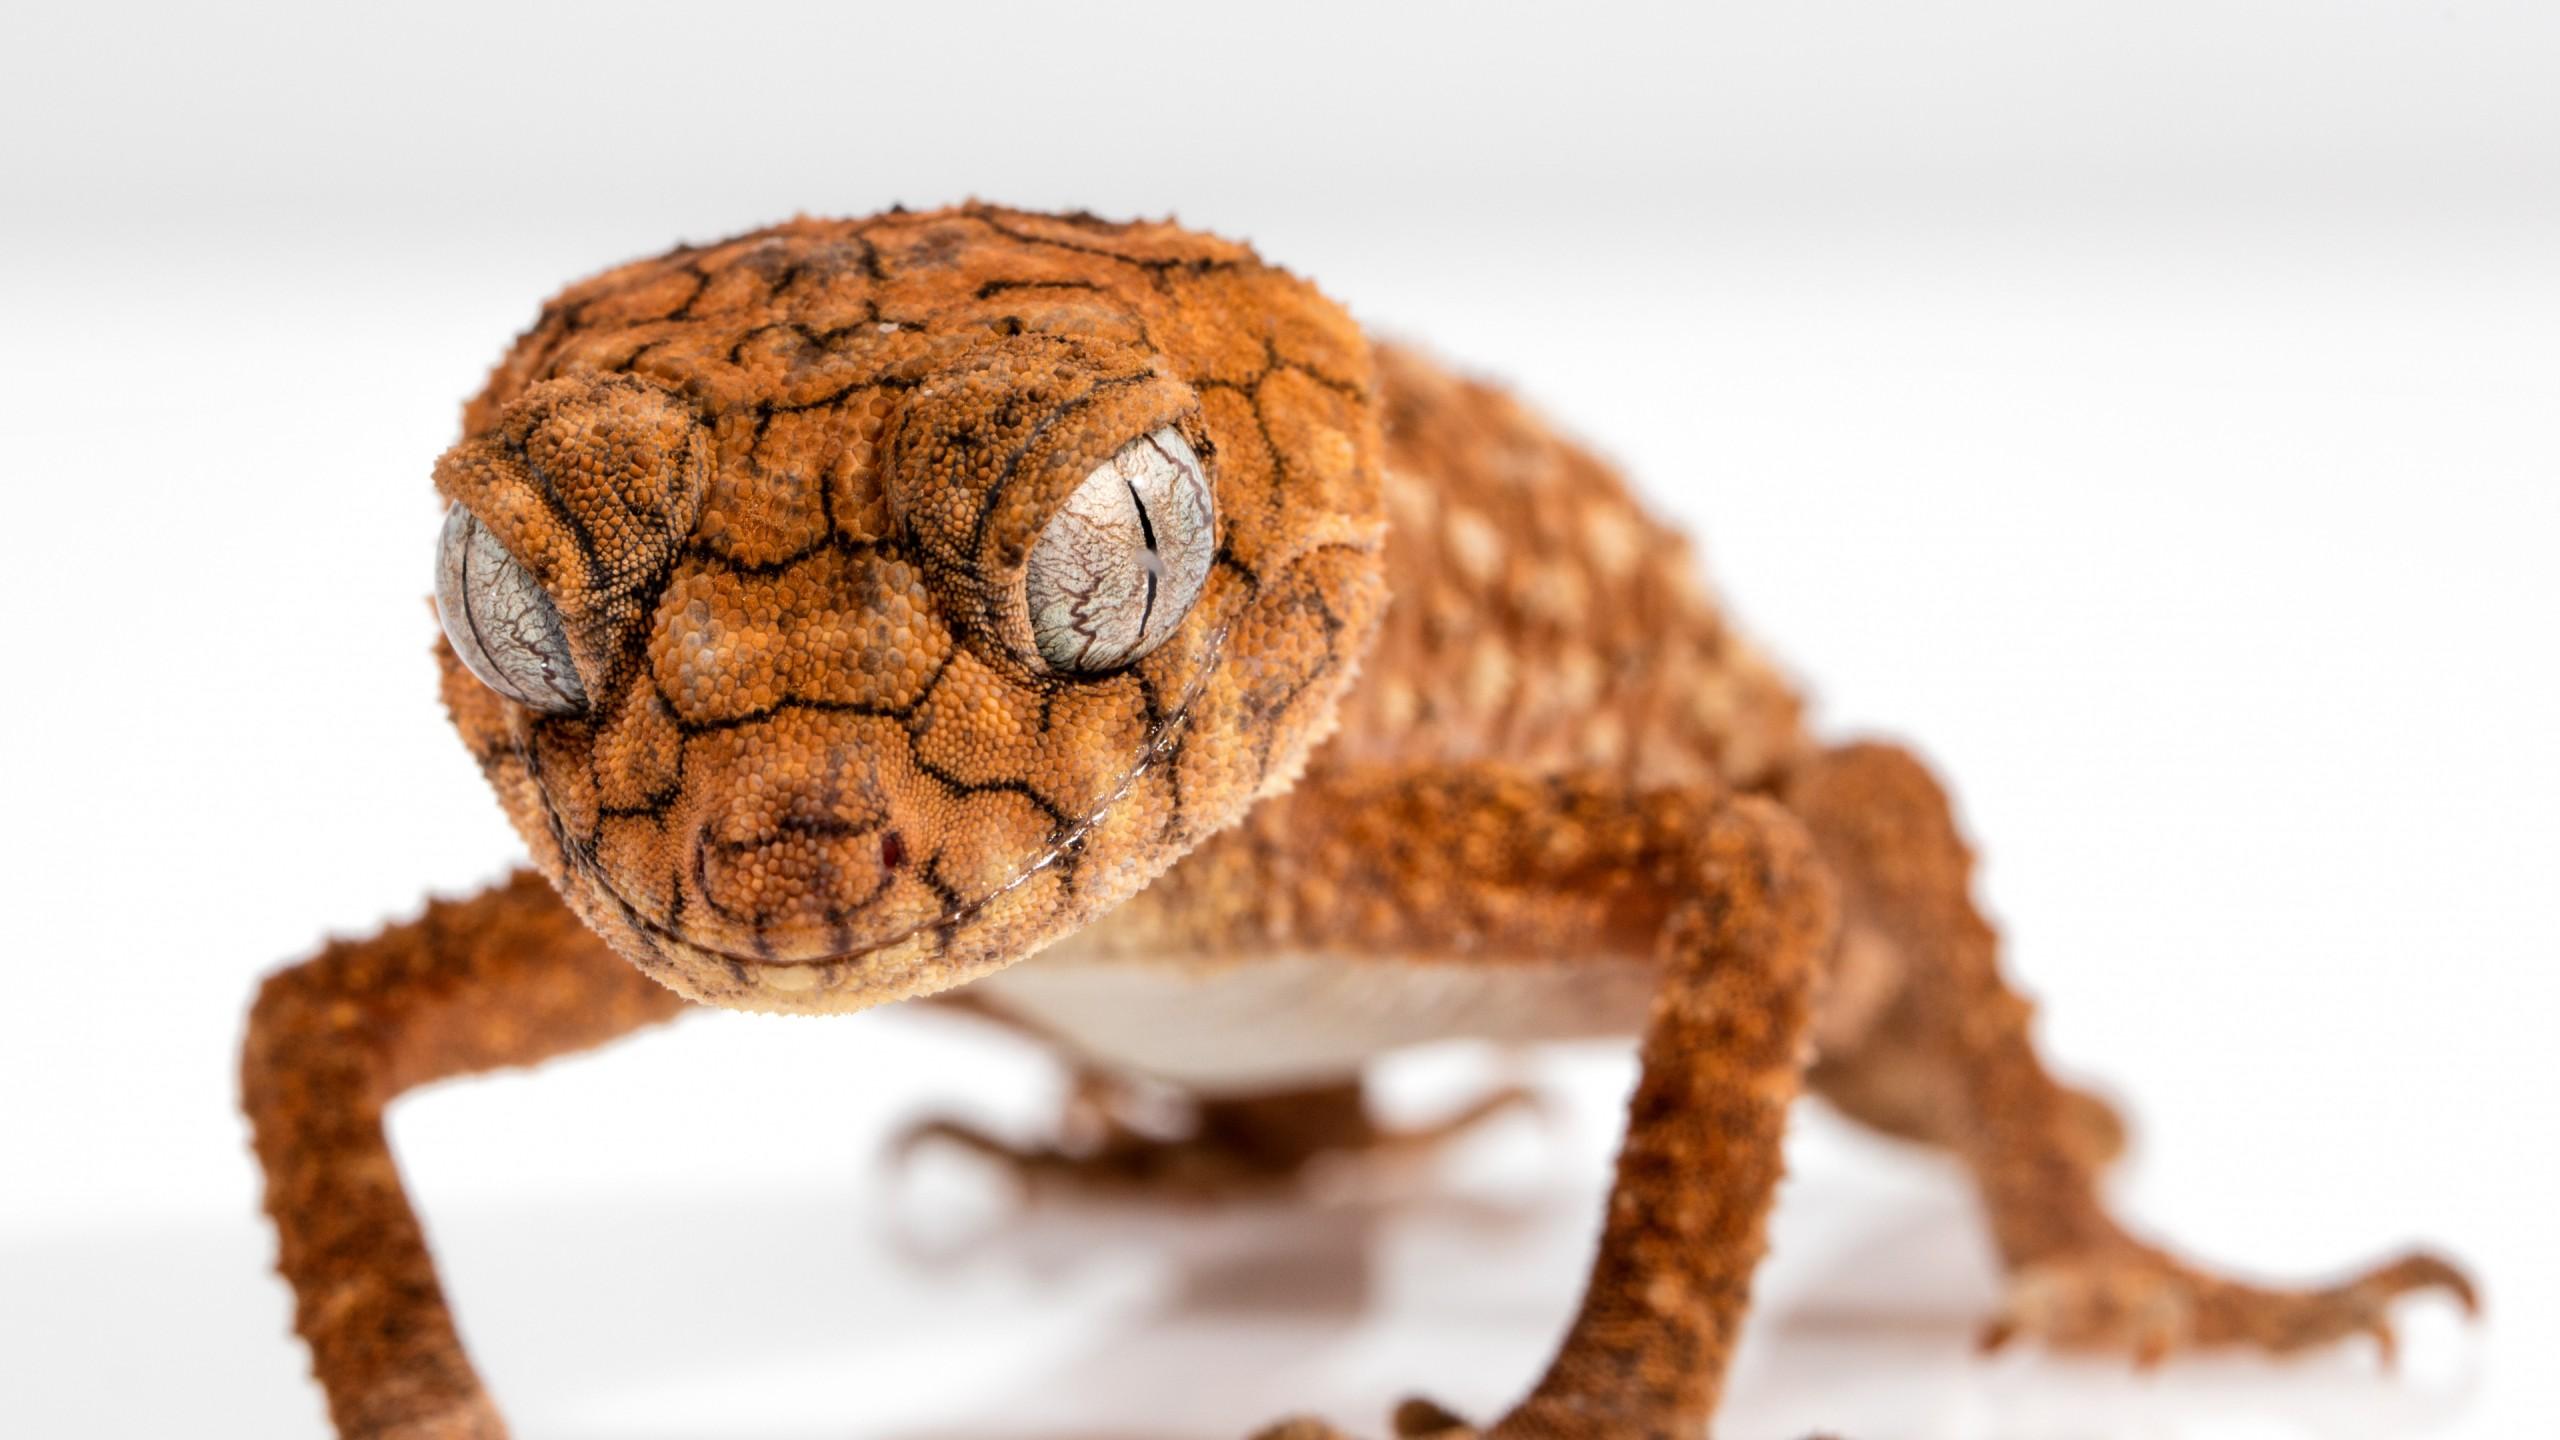 Wallpaper Gecko, Caledonian Crested Gecko, Reptile, Lizard, Close Up